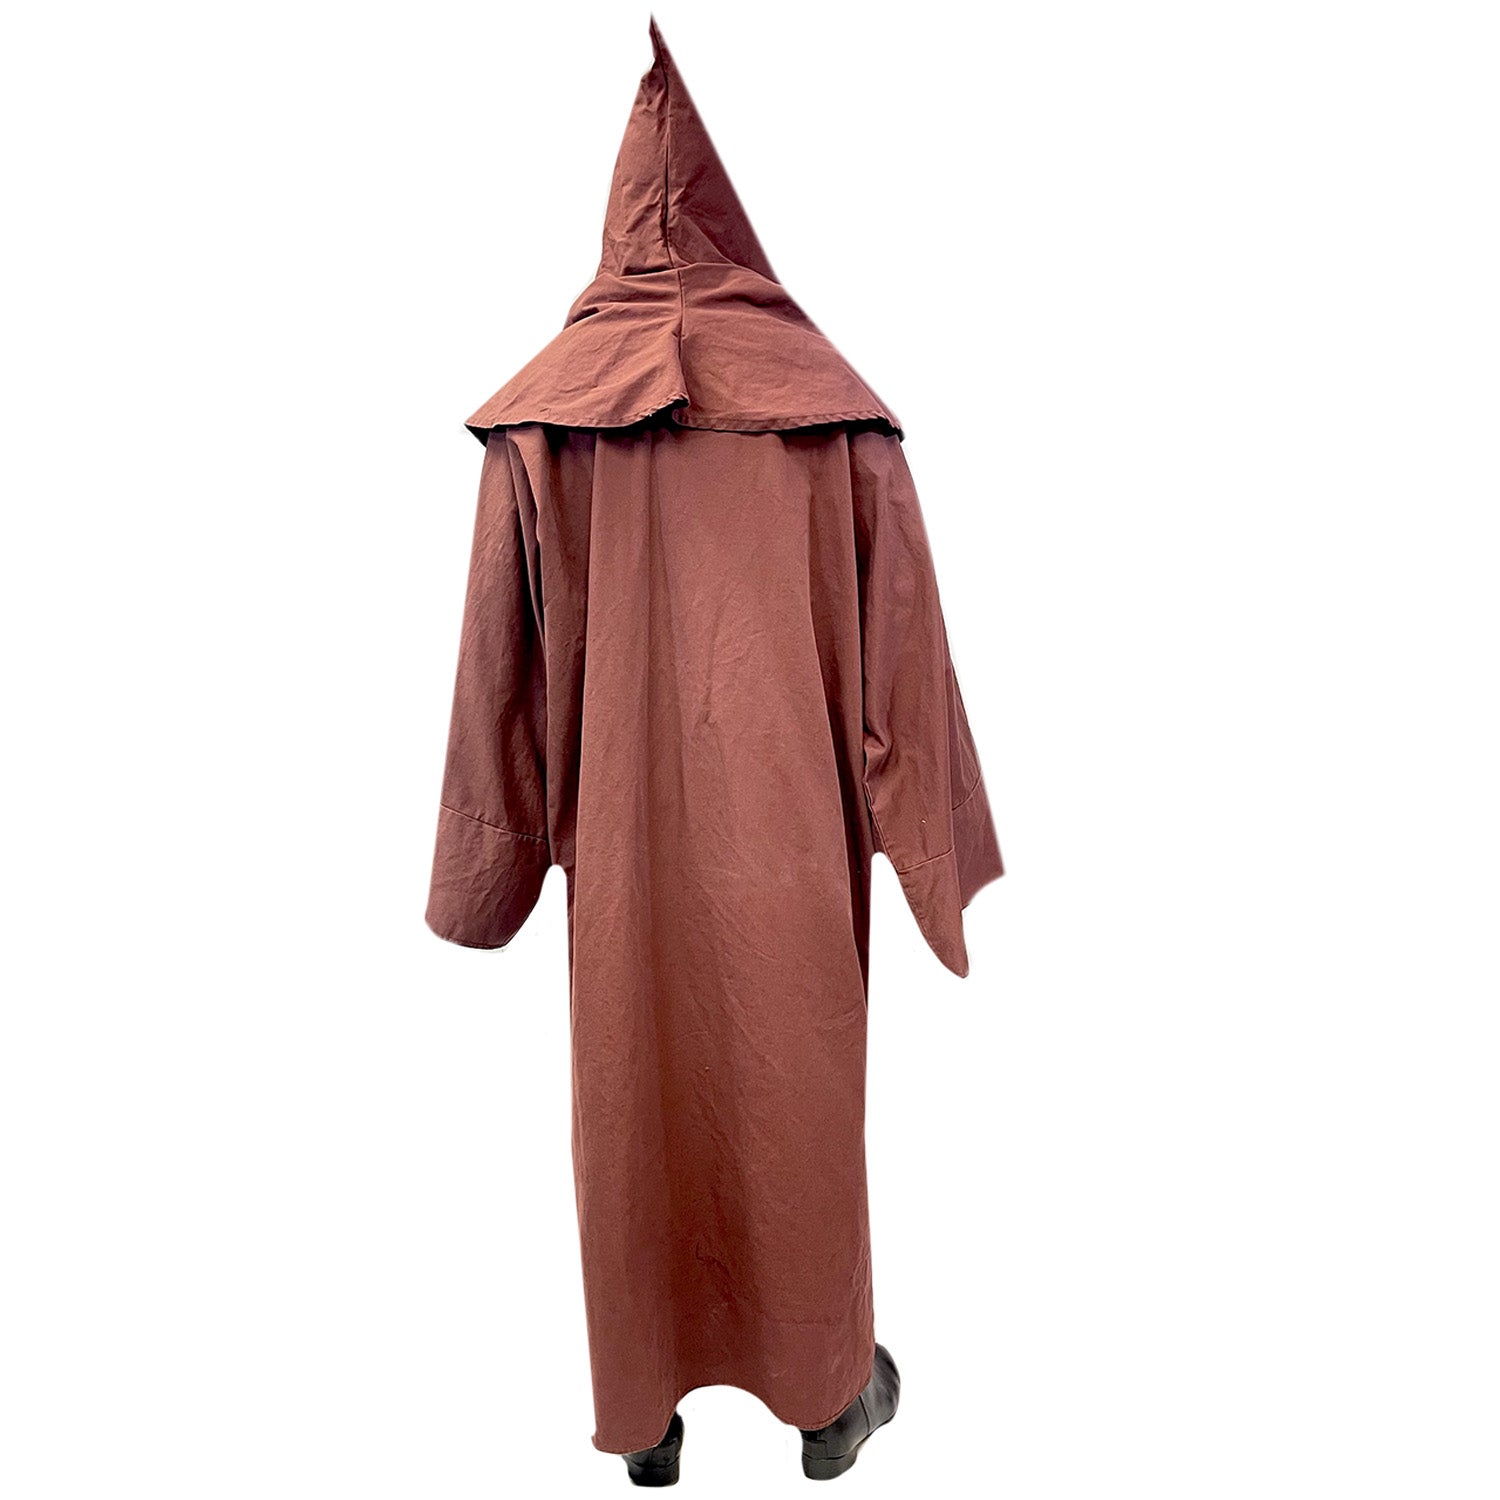 Mystical Brown Monk Standard Adult Costume